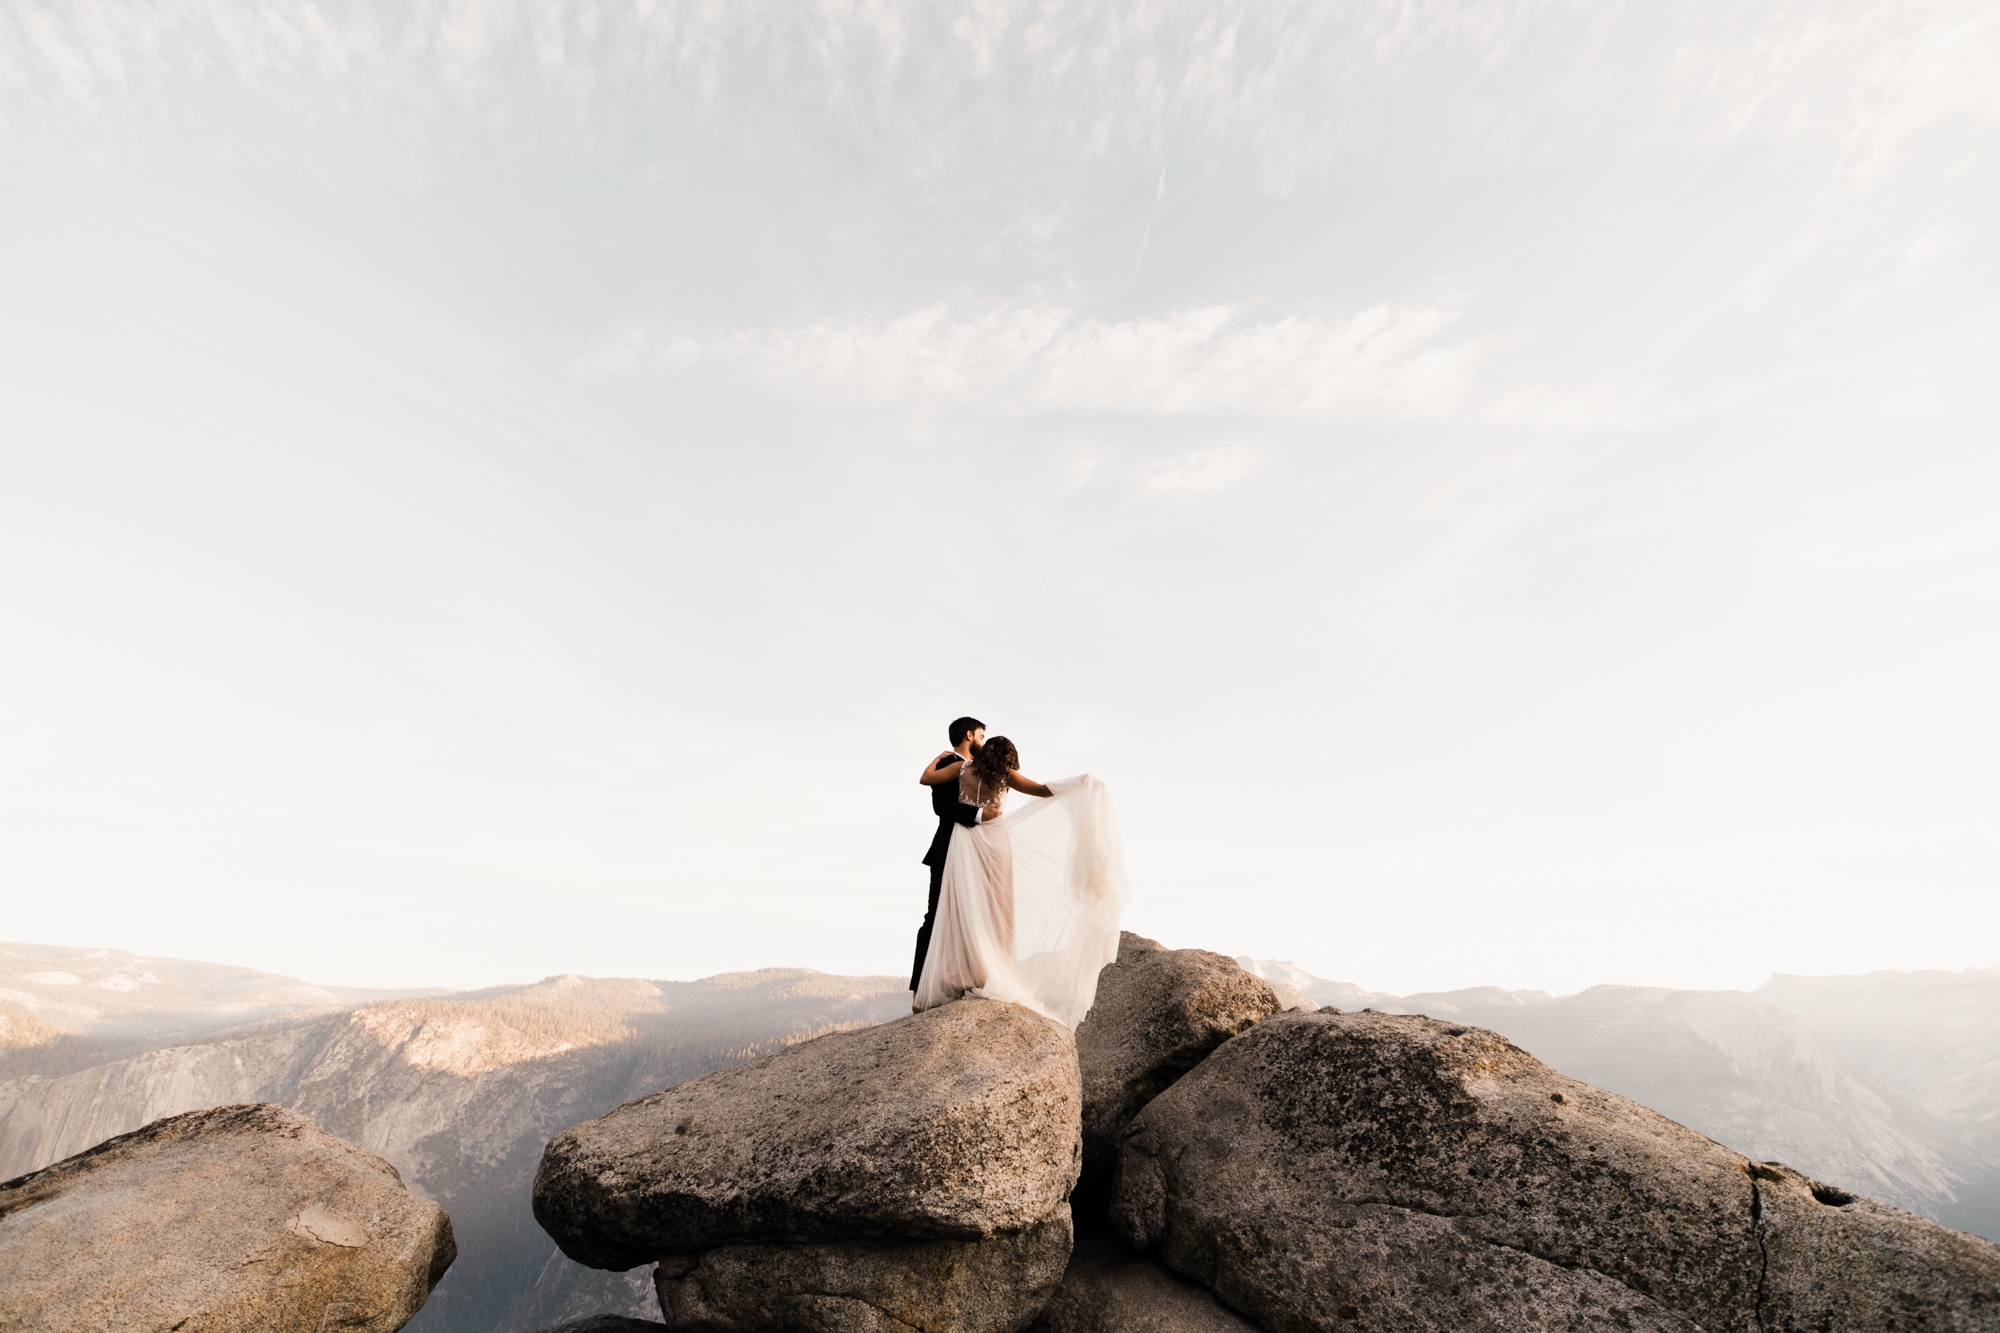 adventurous yosemite elopement | sunrise at glacier point | sunset wedding ceremony at taft point | destination elopement photographer | the hearnes adventure photography | www.thehearnes.com